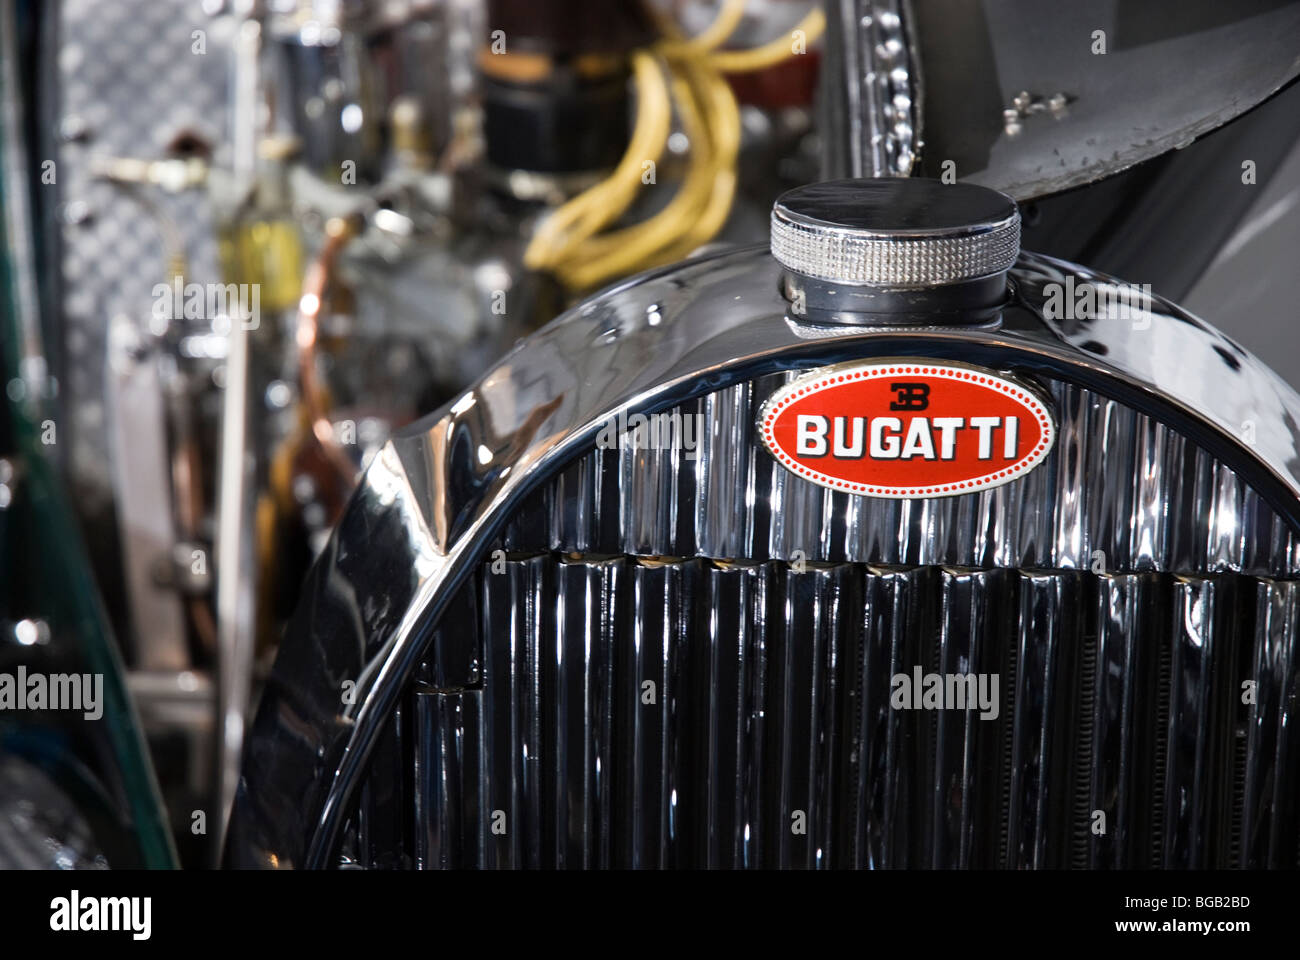 A Bugatti emblem on the radiator of a classic Bugatti Stock Photo